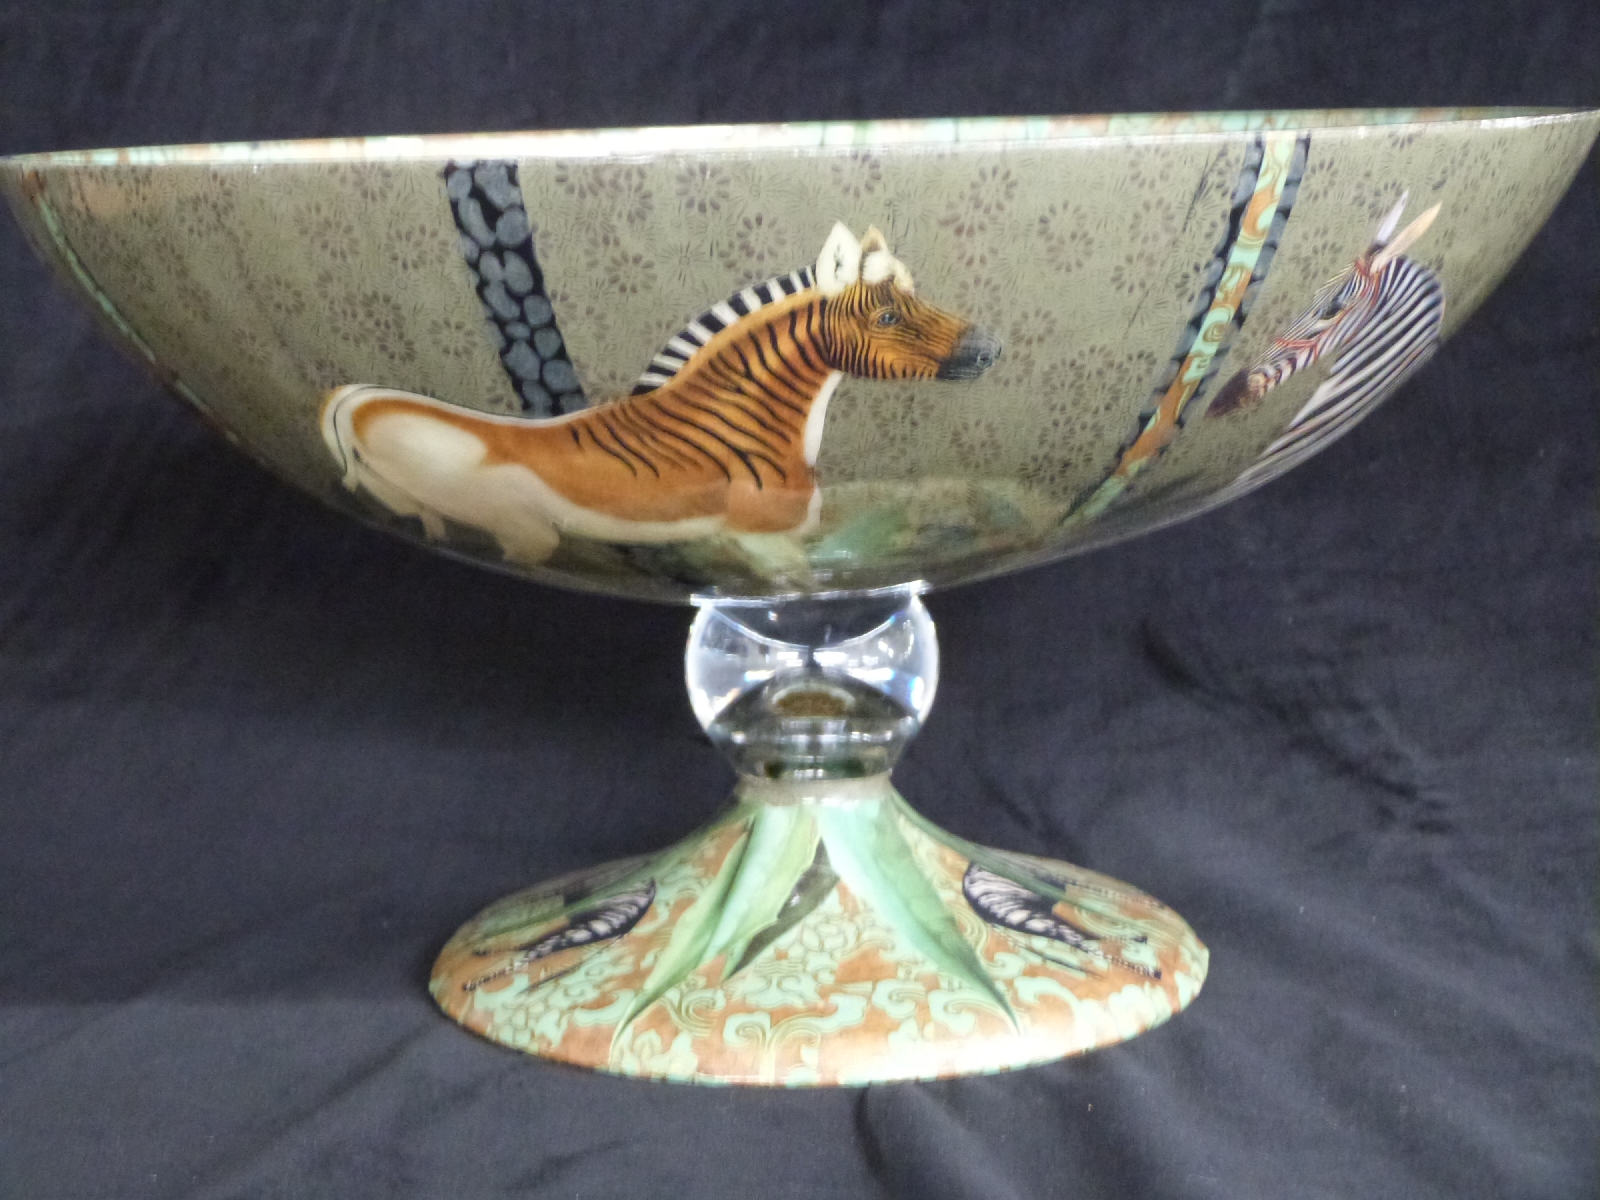 Glass pedestal fruit bowl with rhino and zebra decoration, H20cm, diameter 37cm - Image 4 of 4